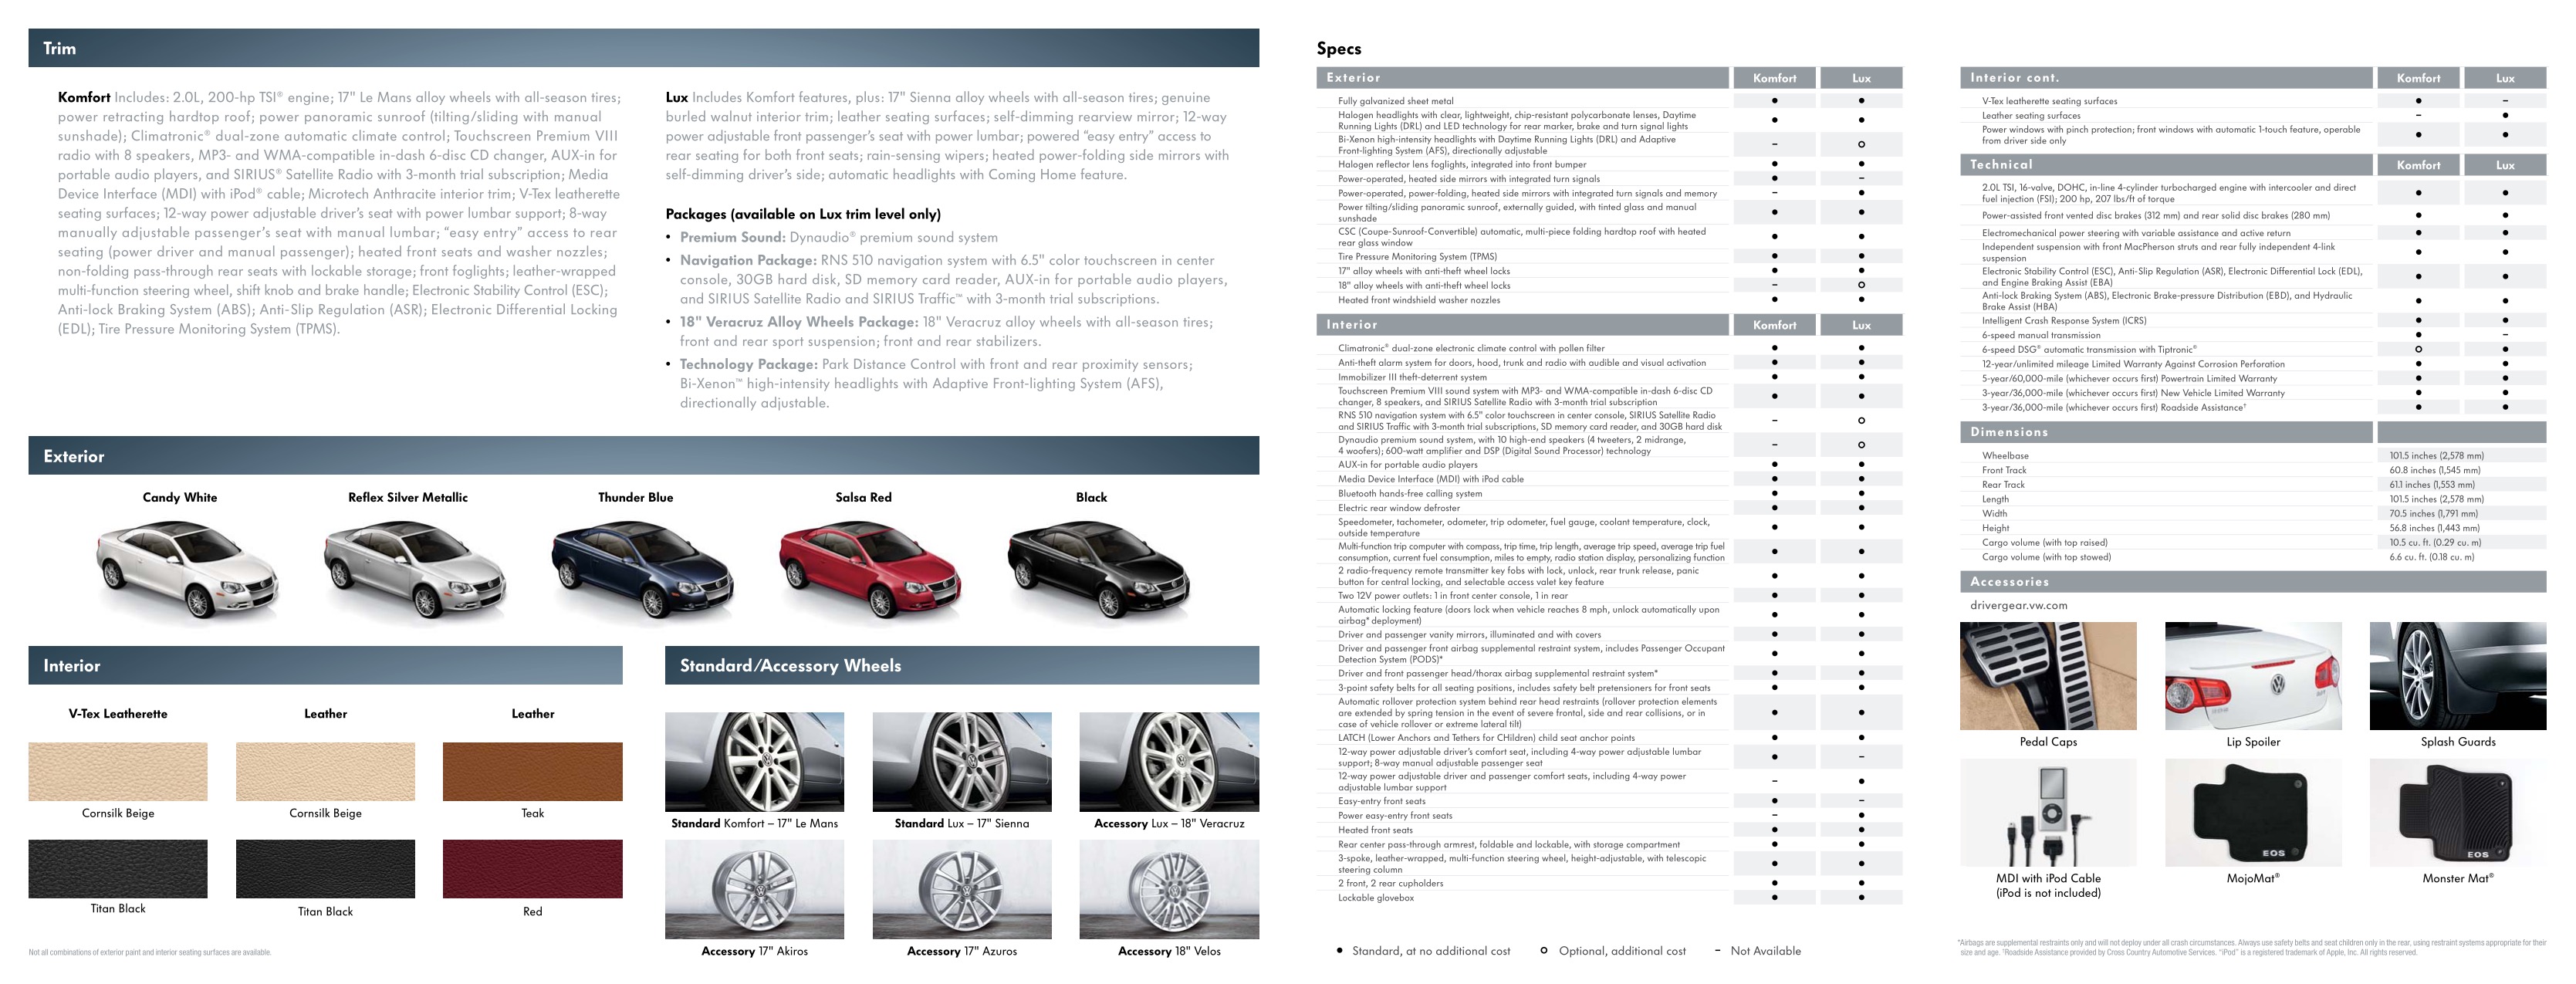 2011 VW Eos Brochure Page 3